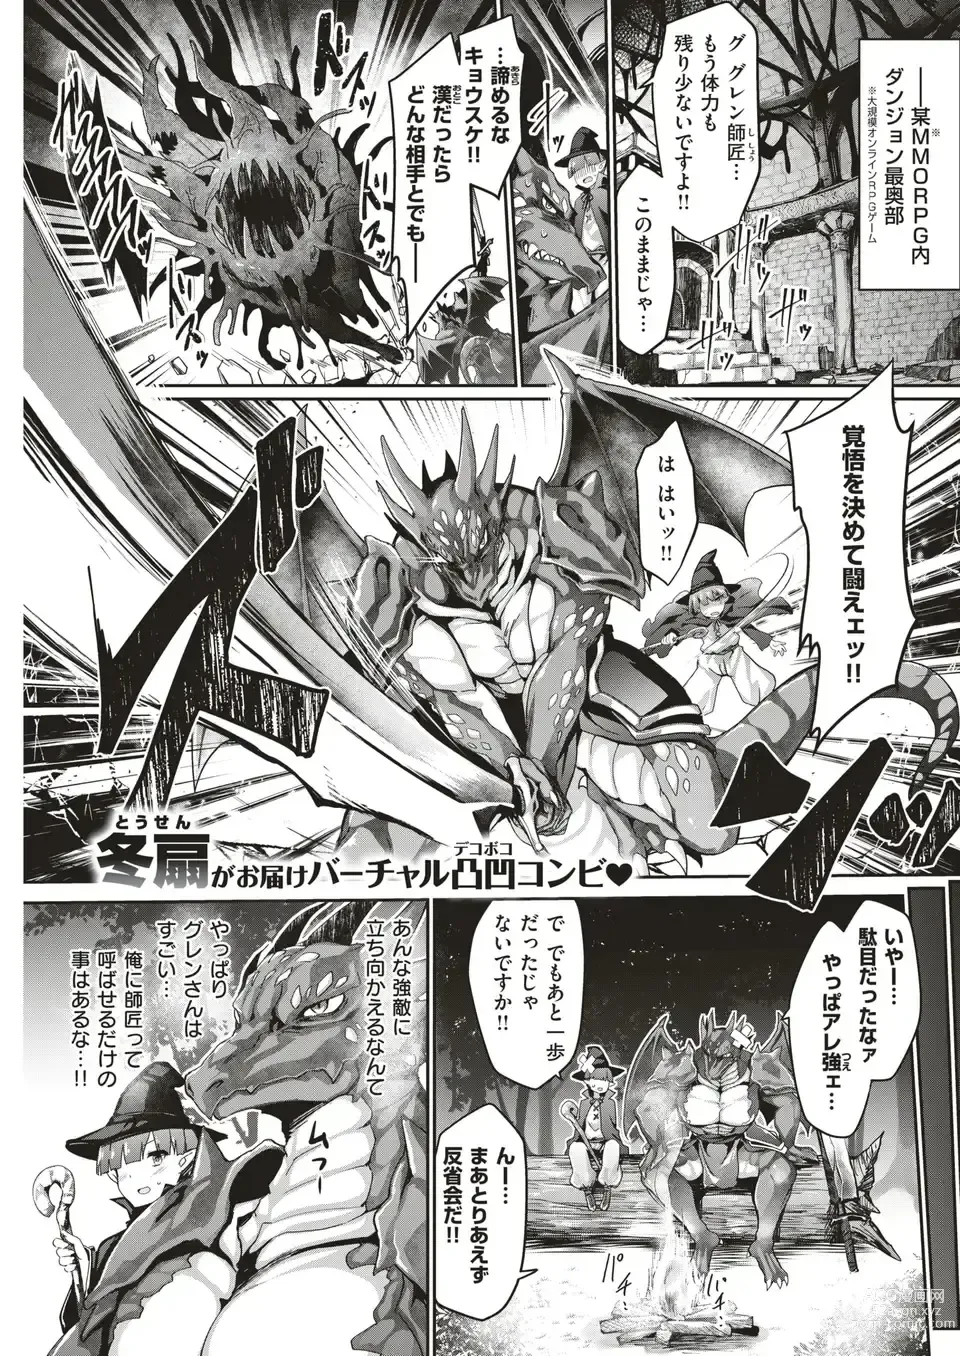 Page 2 of manga REALITY SHOCK